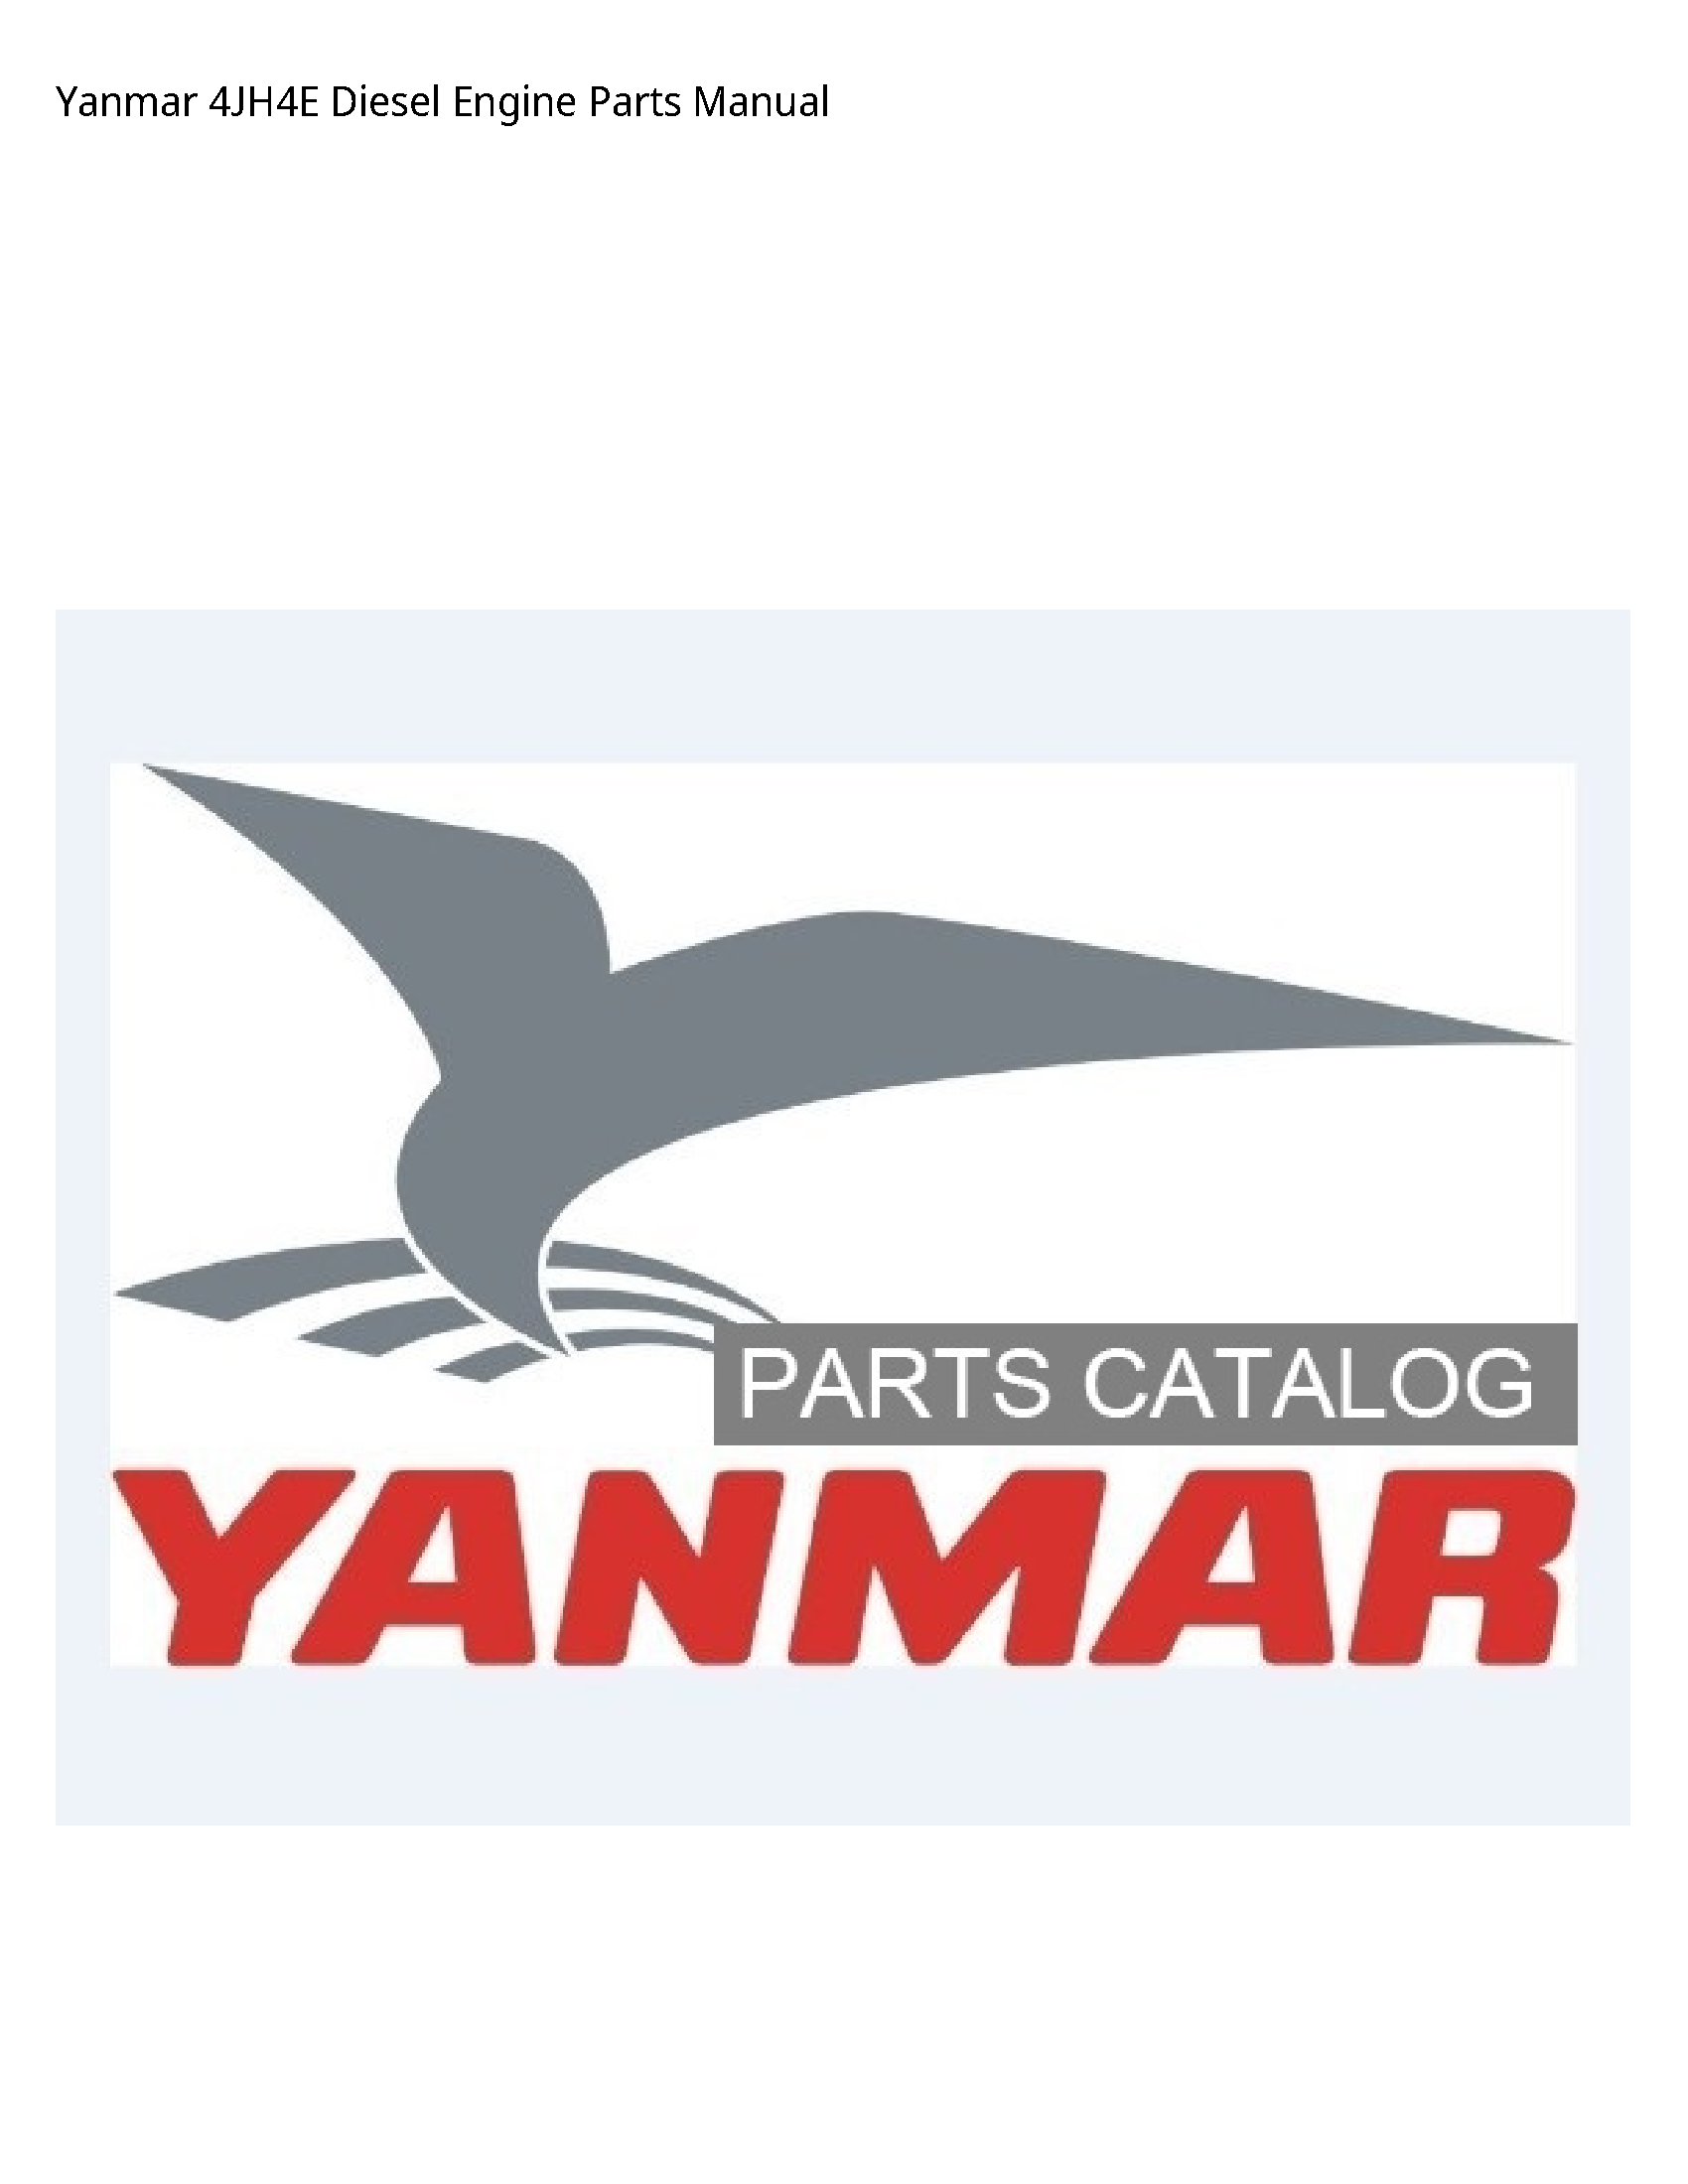 Yanmar 4JH4E Diesel Engine Parts manual